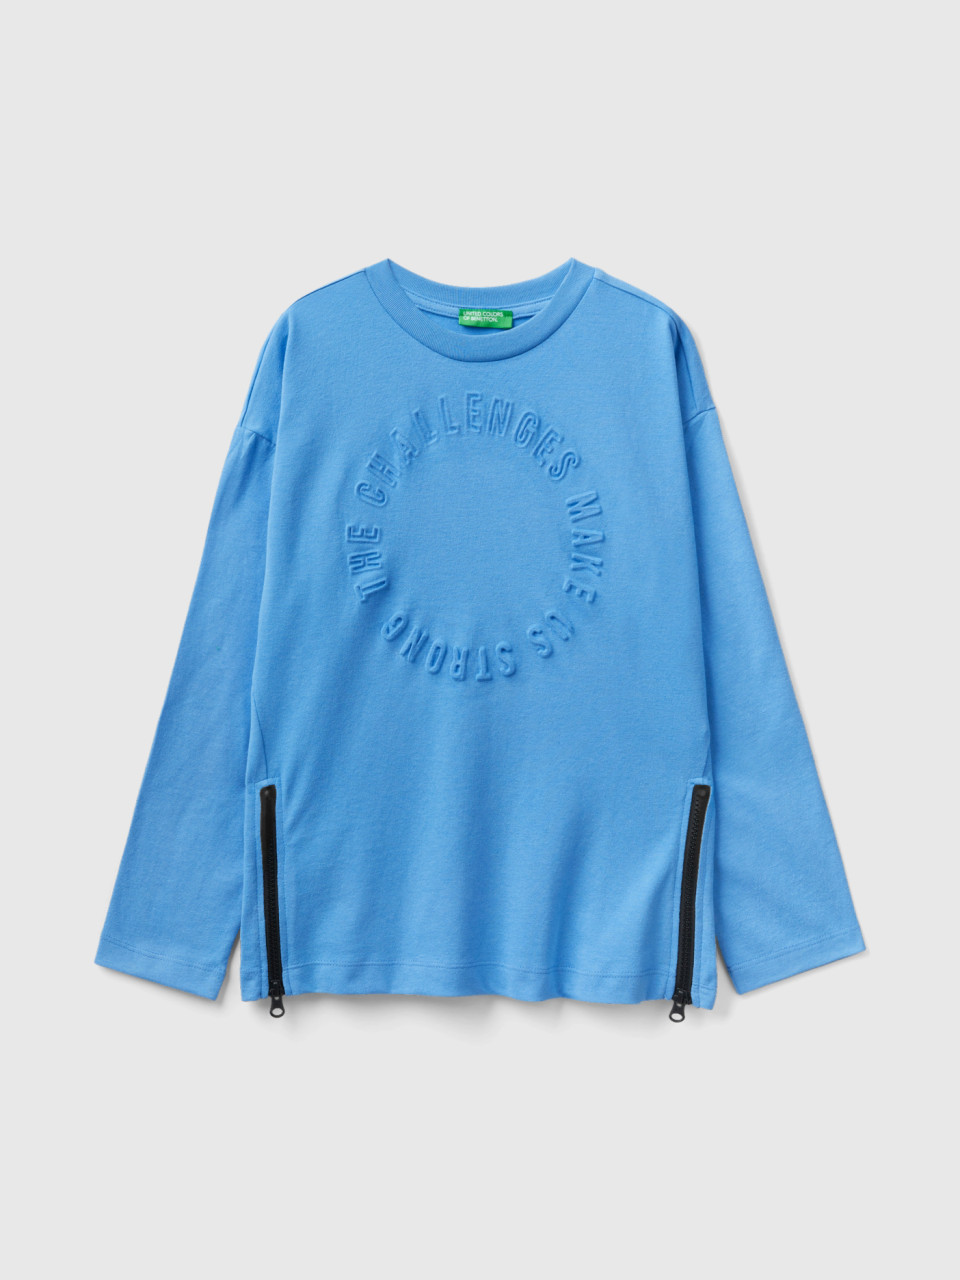 Benetton, Oversized Fit Sweatshirt With Embossed Print, Light Blue, Kids